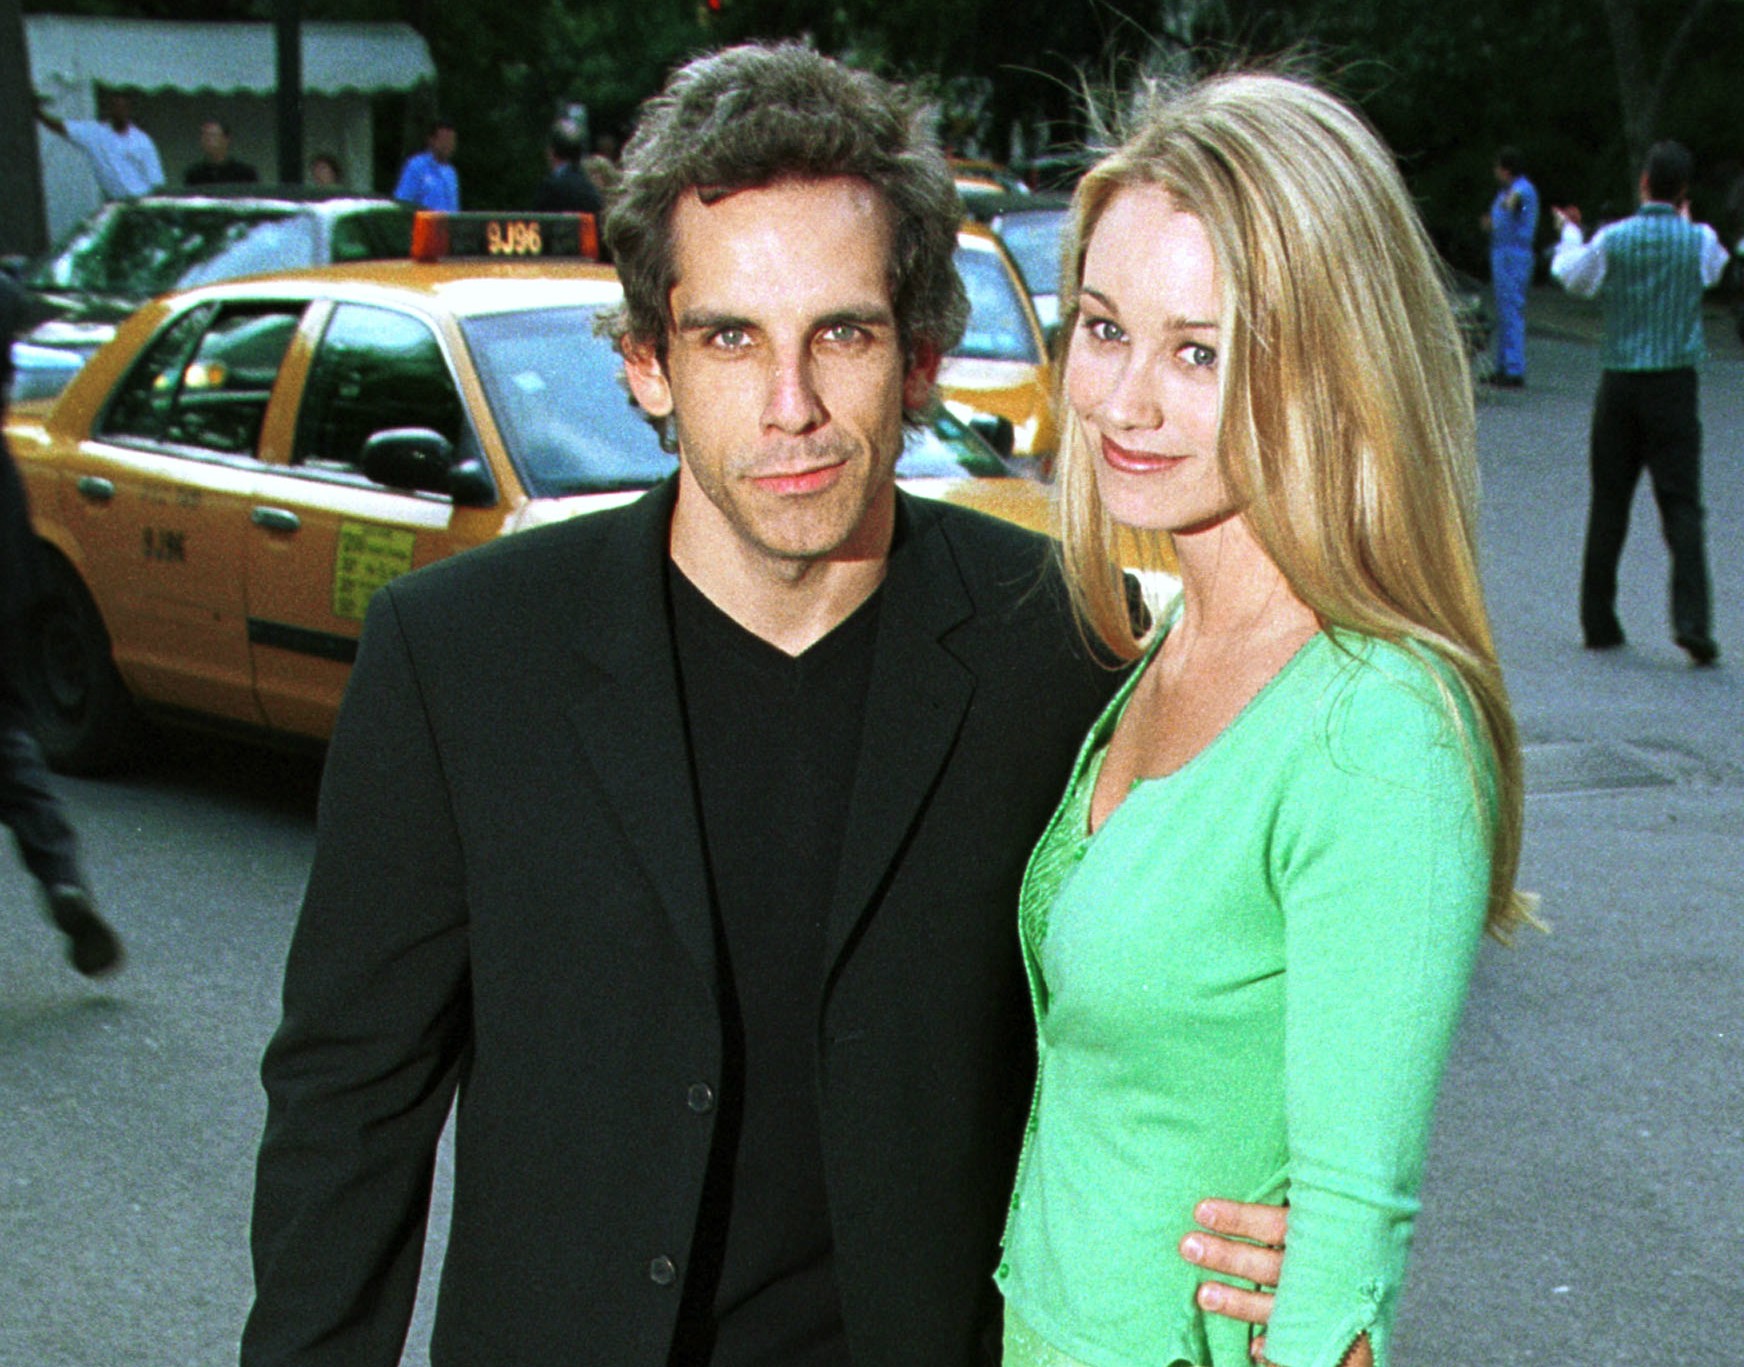 Ben Stiller e Christine Taylor, casados desde maio de 2000. (Foto: Getty Images)